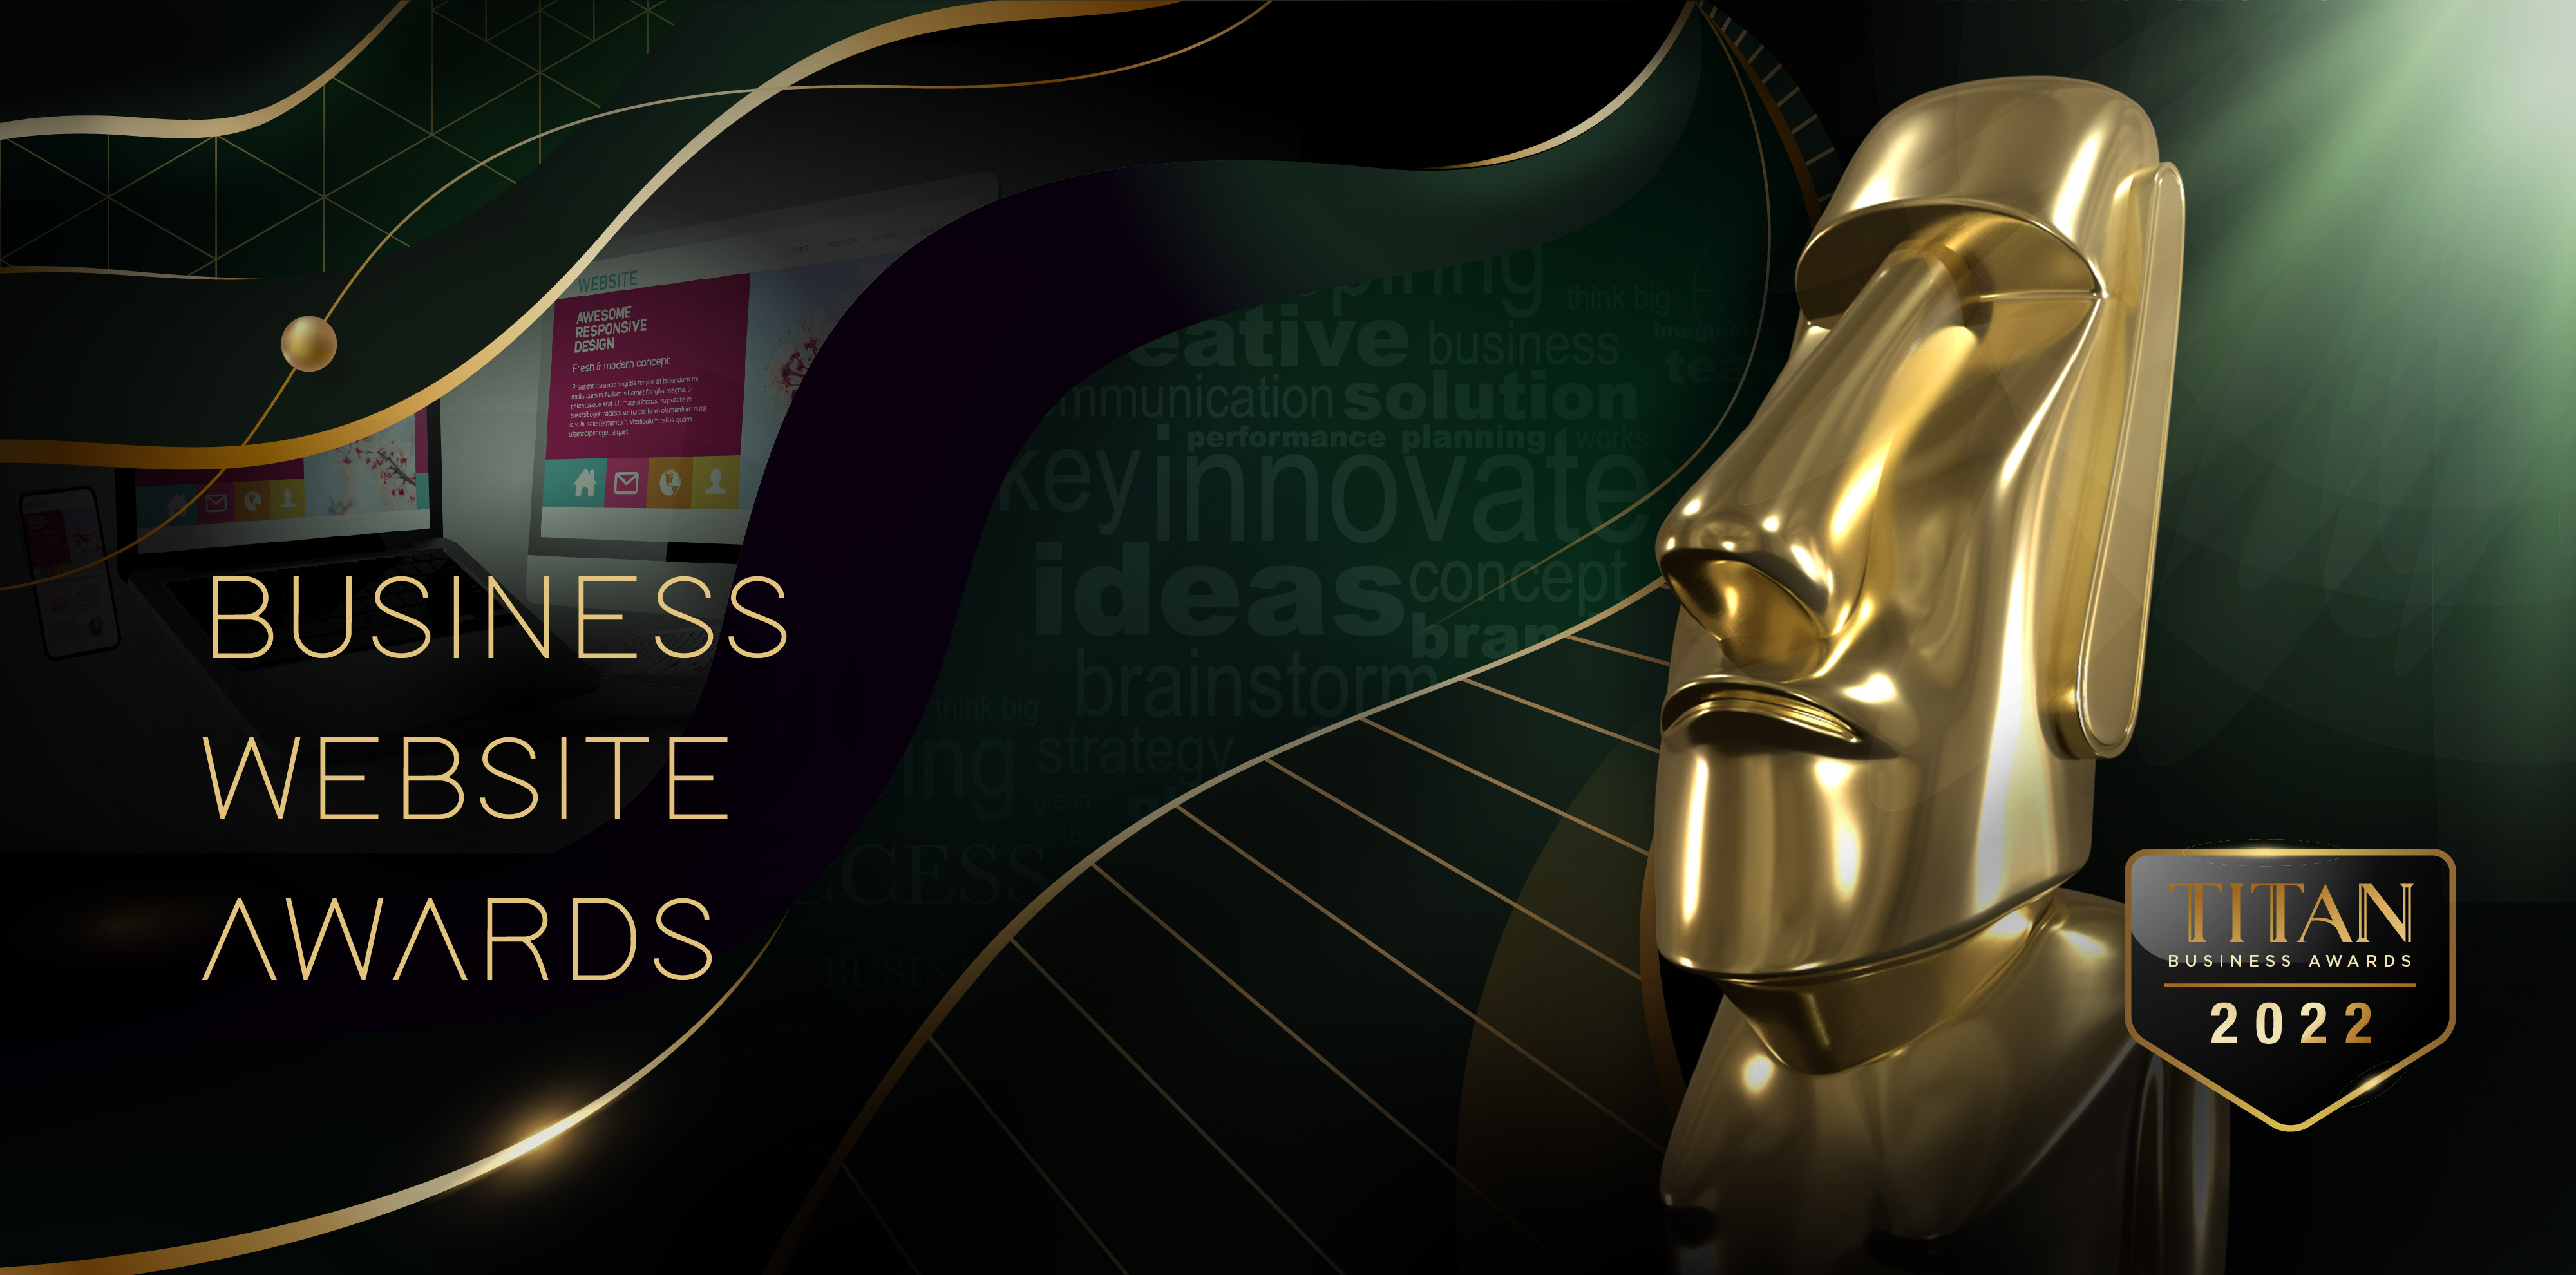 TITAN Website Awards | International Business Awards